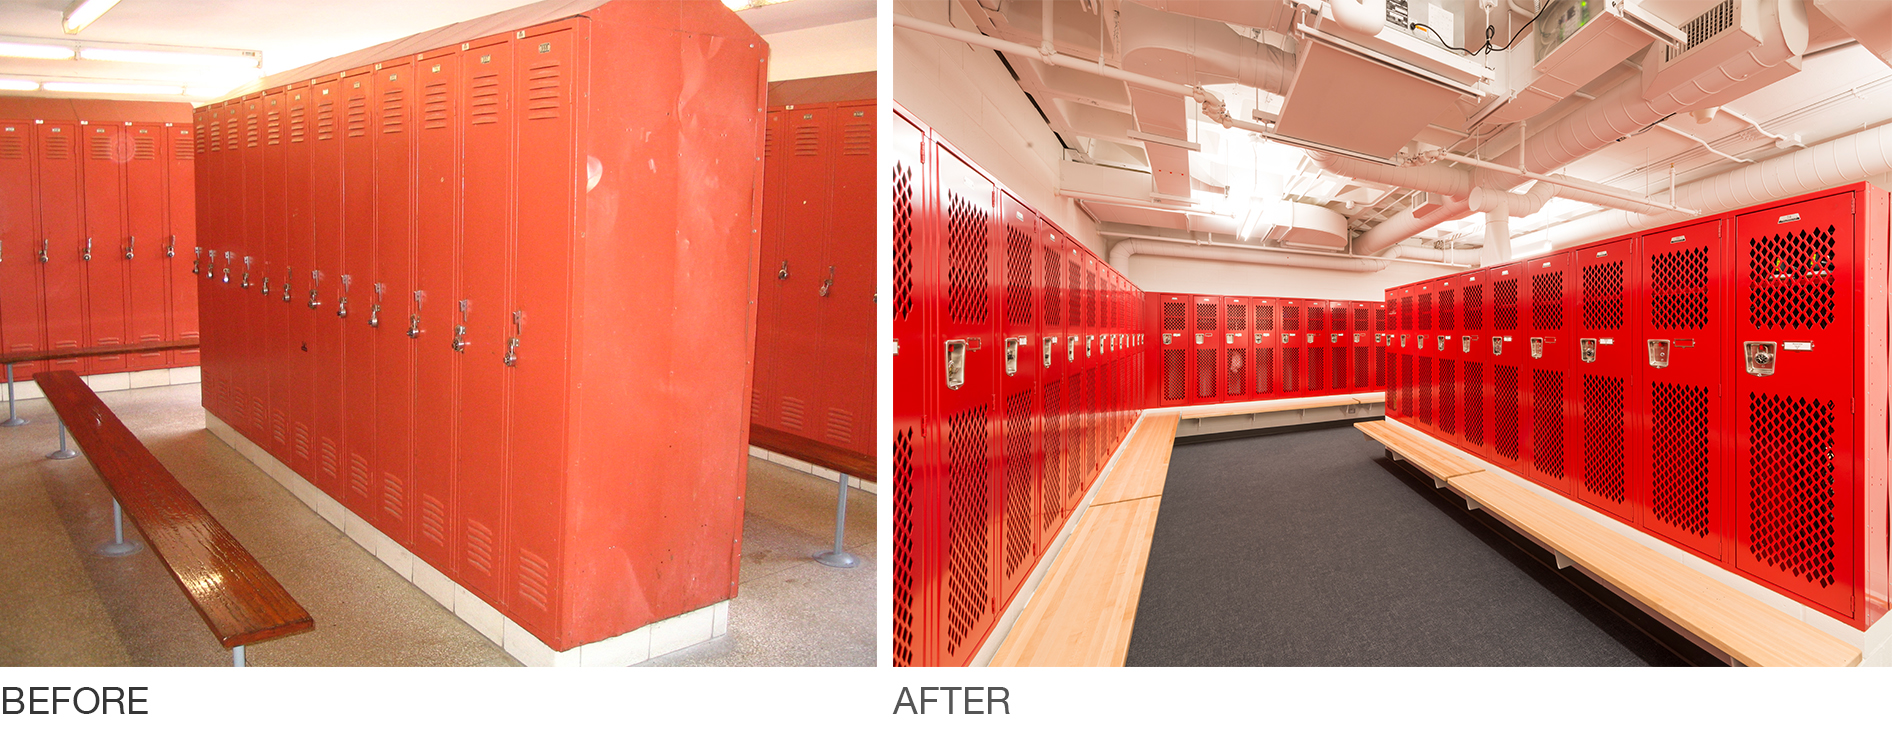 SMMA Renovation Worcester Polytechnic Institute (WPI) locker rooms